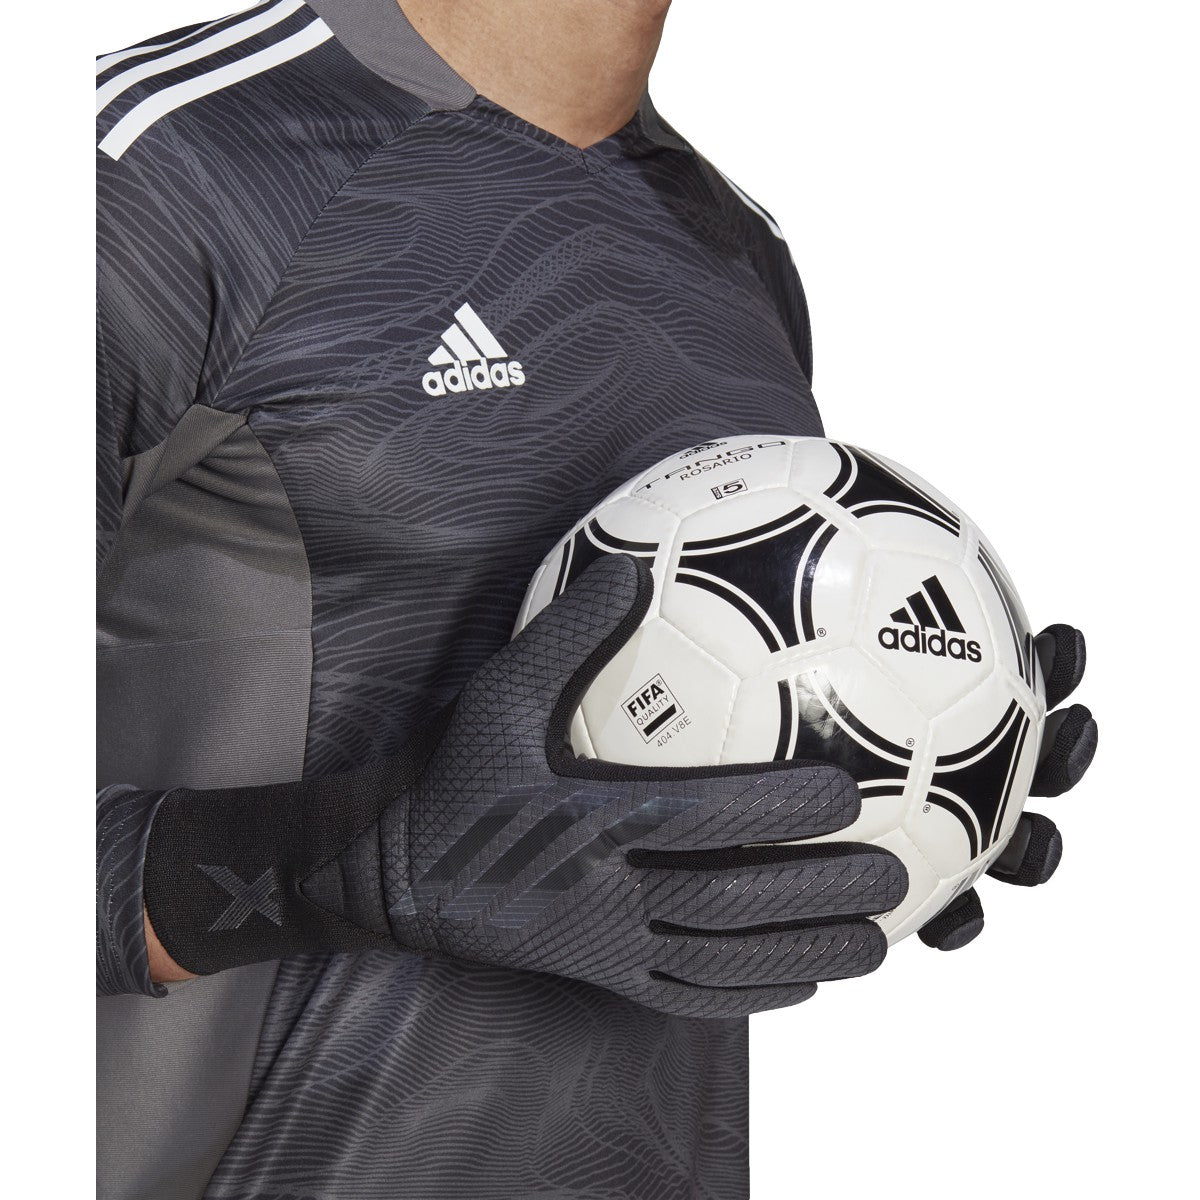 Adidas Predator League Gloves Neon Green/Black FS0403 7